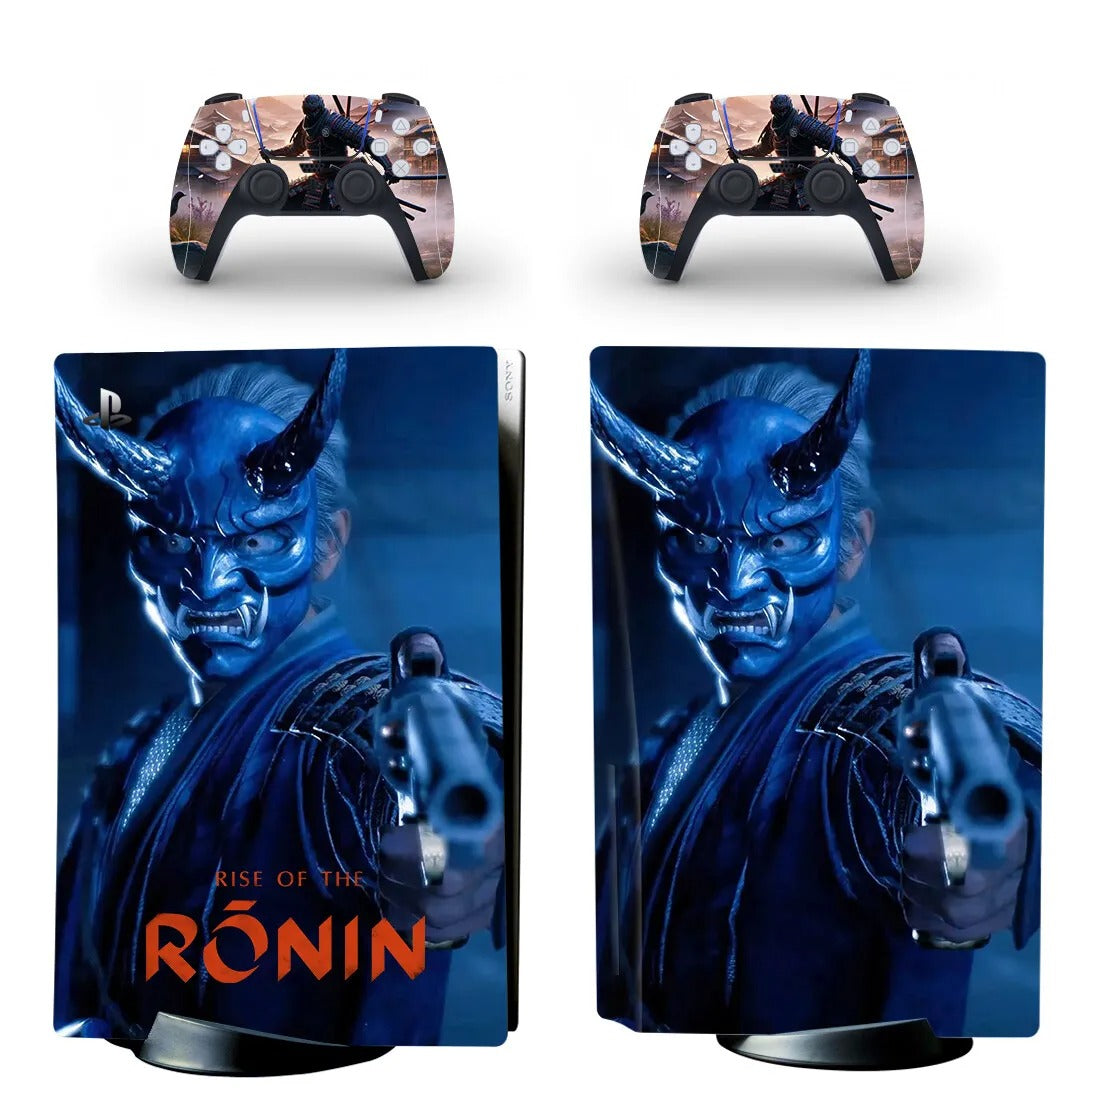 PS5 Aufkleber Skin mit Rise of the Ronin Motiv